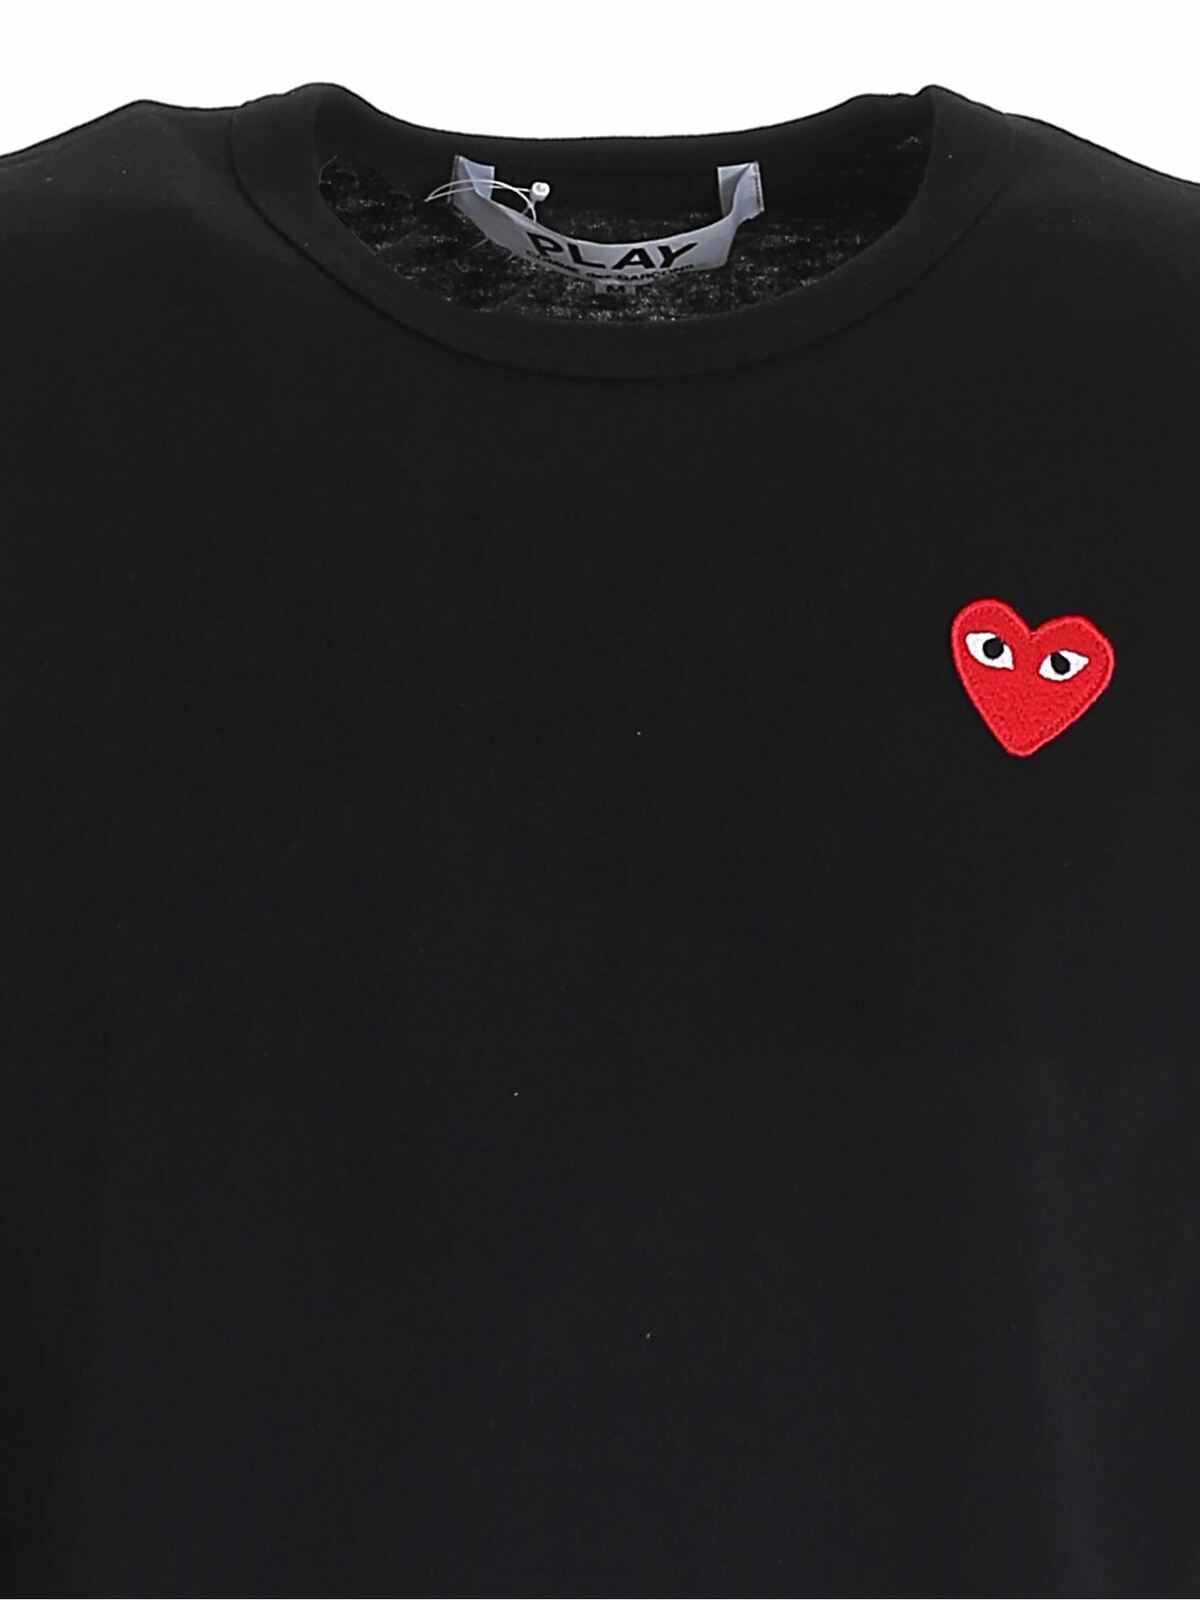 Heart logo long sleeves T-shirt in black